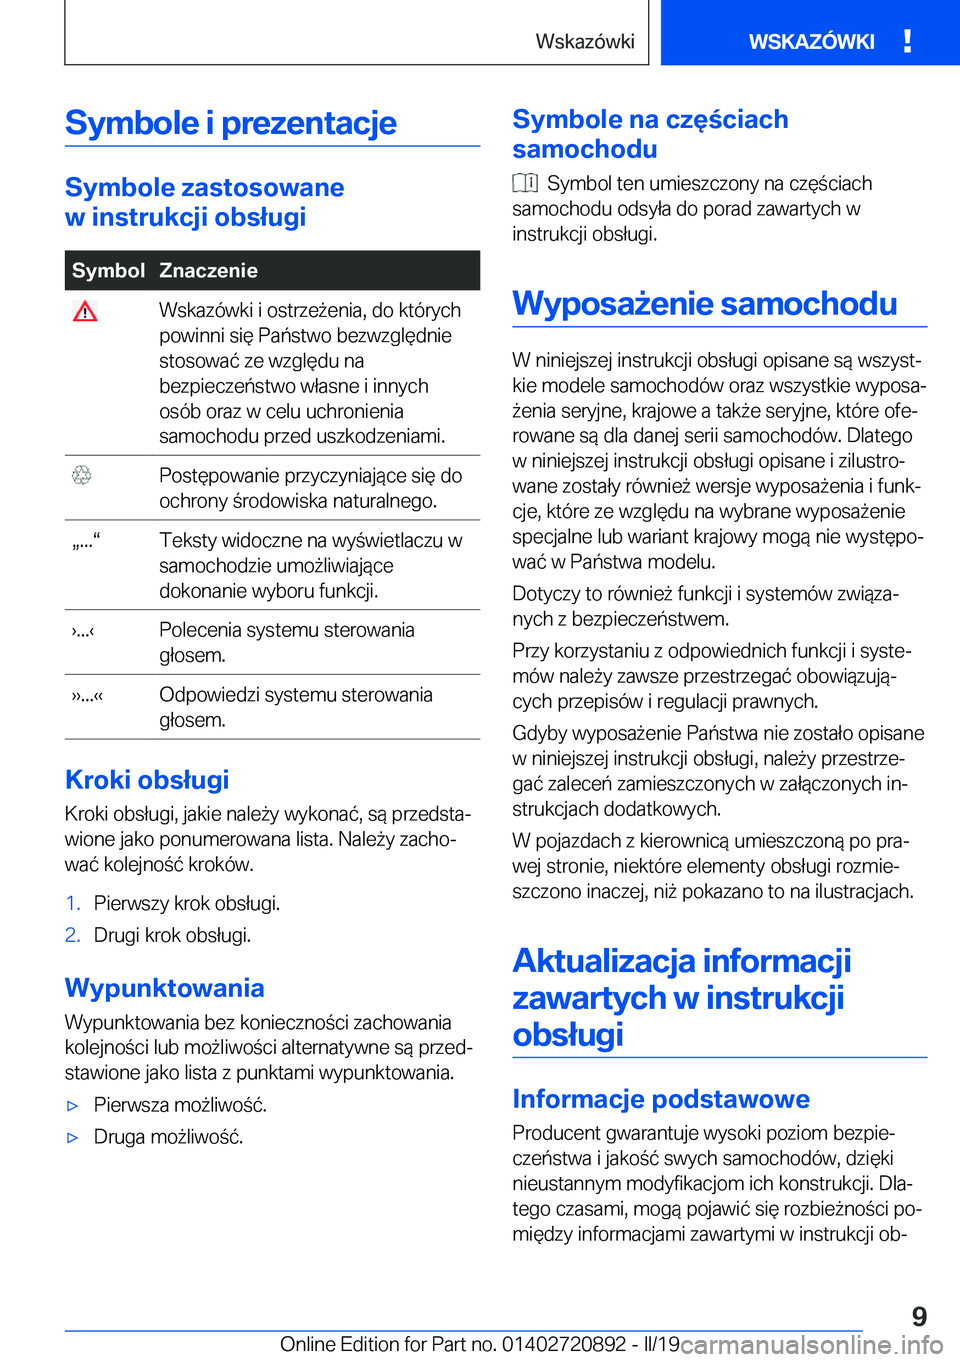 BMW X7 2019  Instrukcja obsługi (in Polish) �S�y�m�b�o�l�e��i��p�r�e�z�e�n�t�a�c�j�e
�S�y�m�b�o�l�e��z�a�s�t�o�s�o�w�a�n�e
�w��i�n�s�t�r�u�k�c�j�i��o�b�s�ł�u�g�i
�S�y�m�b�o�l�Z�n�a�c�z�e�n�i�e��W�s�k�a�z�